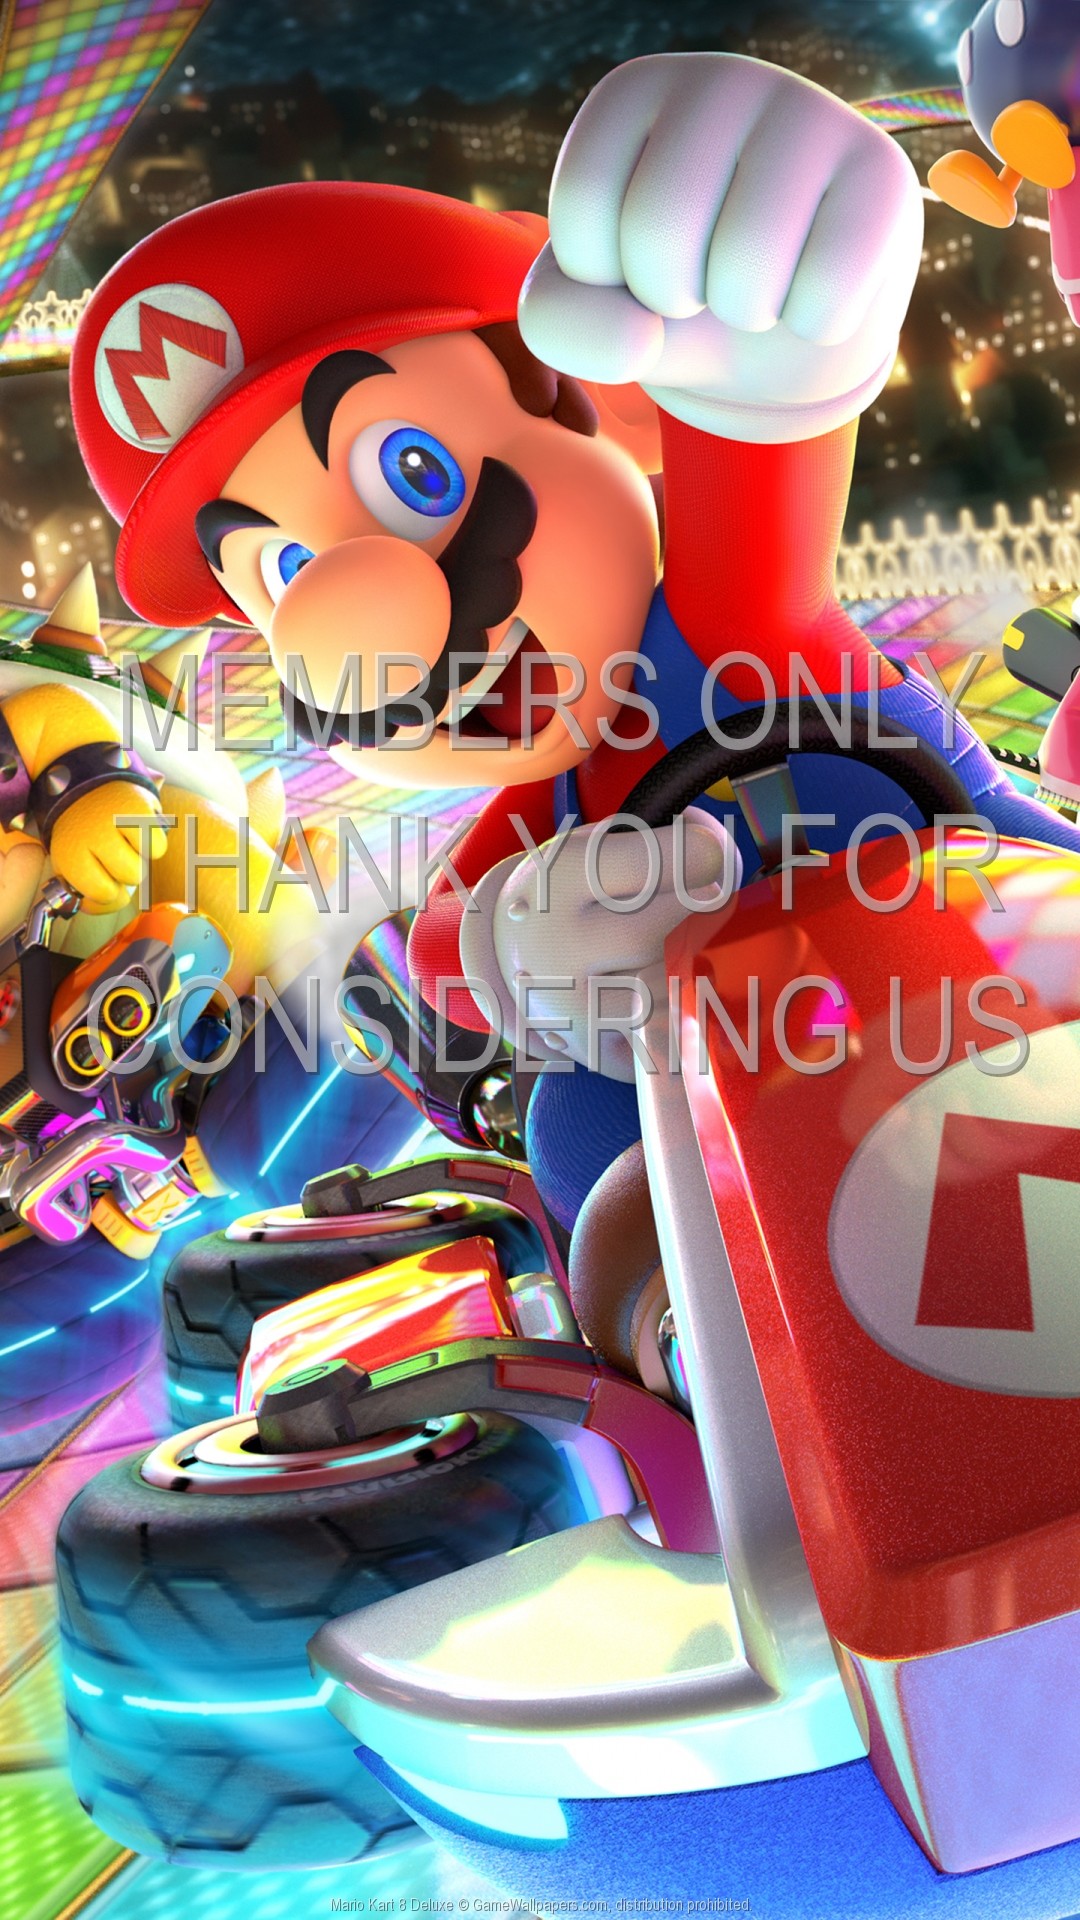 Mario Kart Wallpaper HD Image